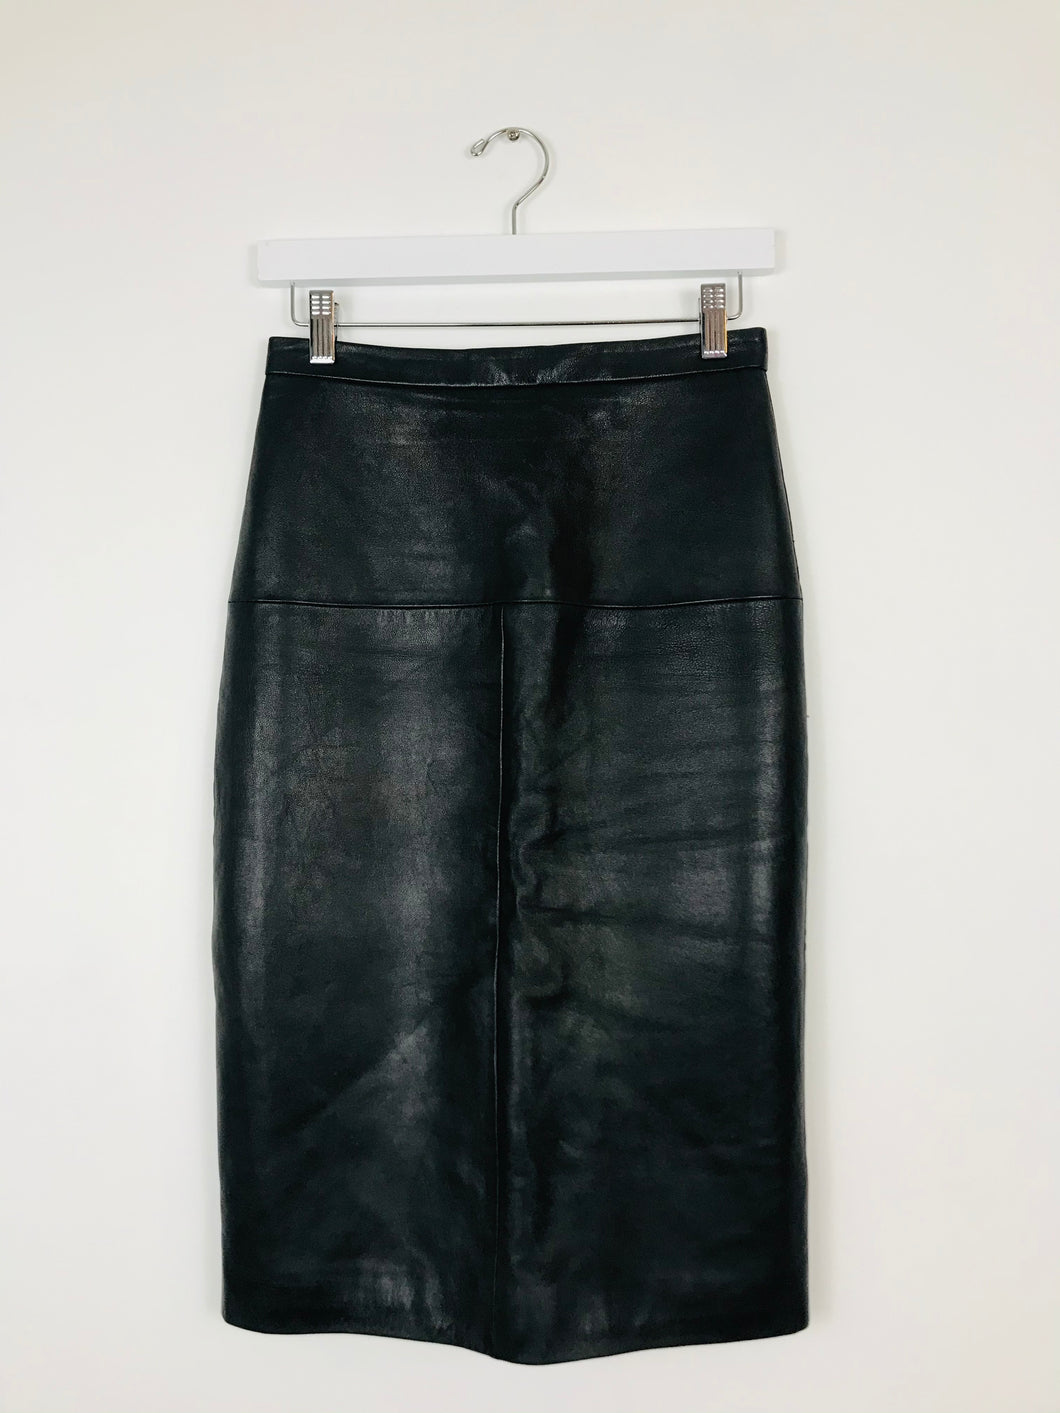 Eudon Choi Womens Leather Pencil Skirt | UK8-10 W27 L25.5 | Black